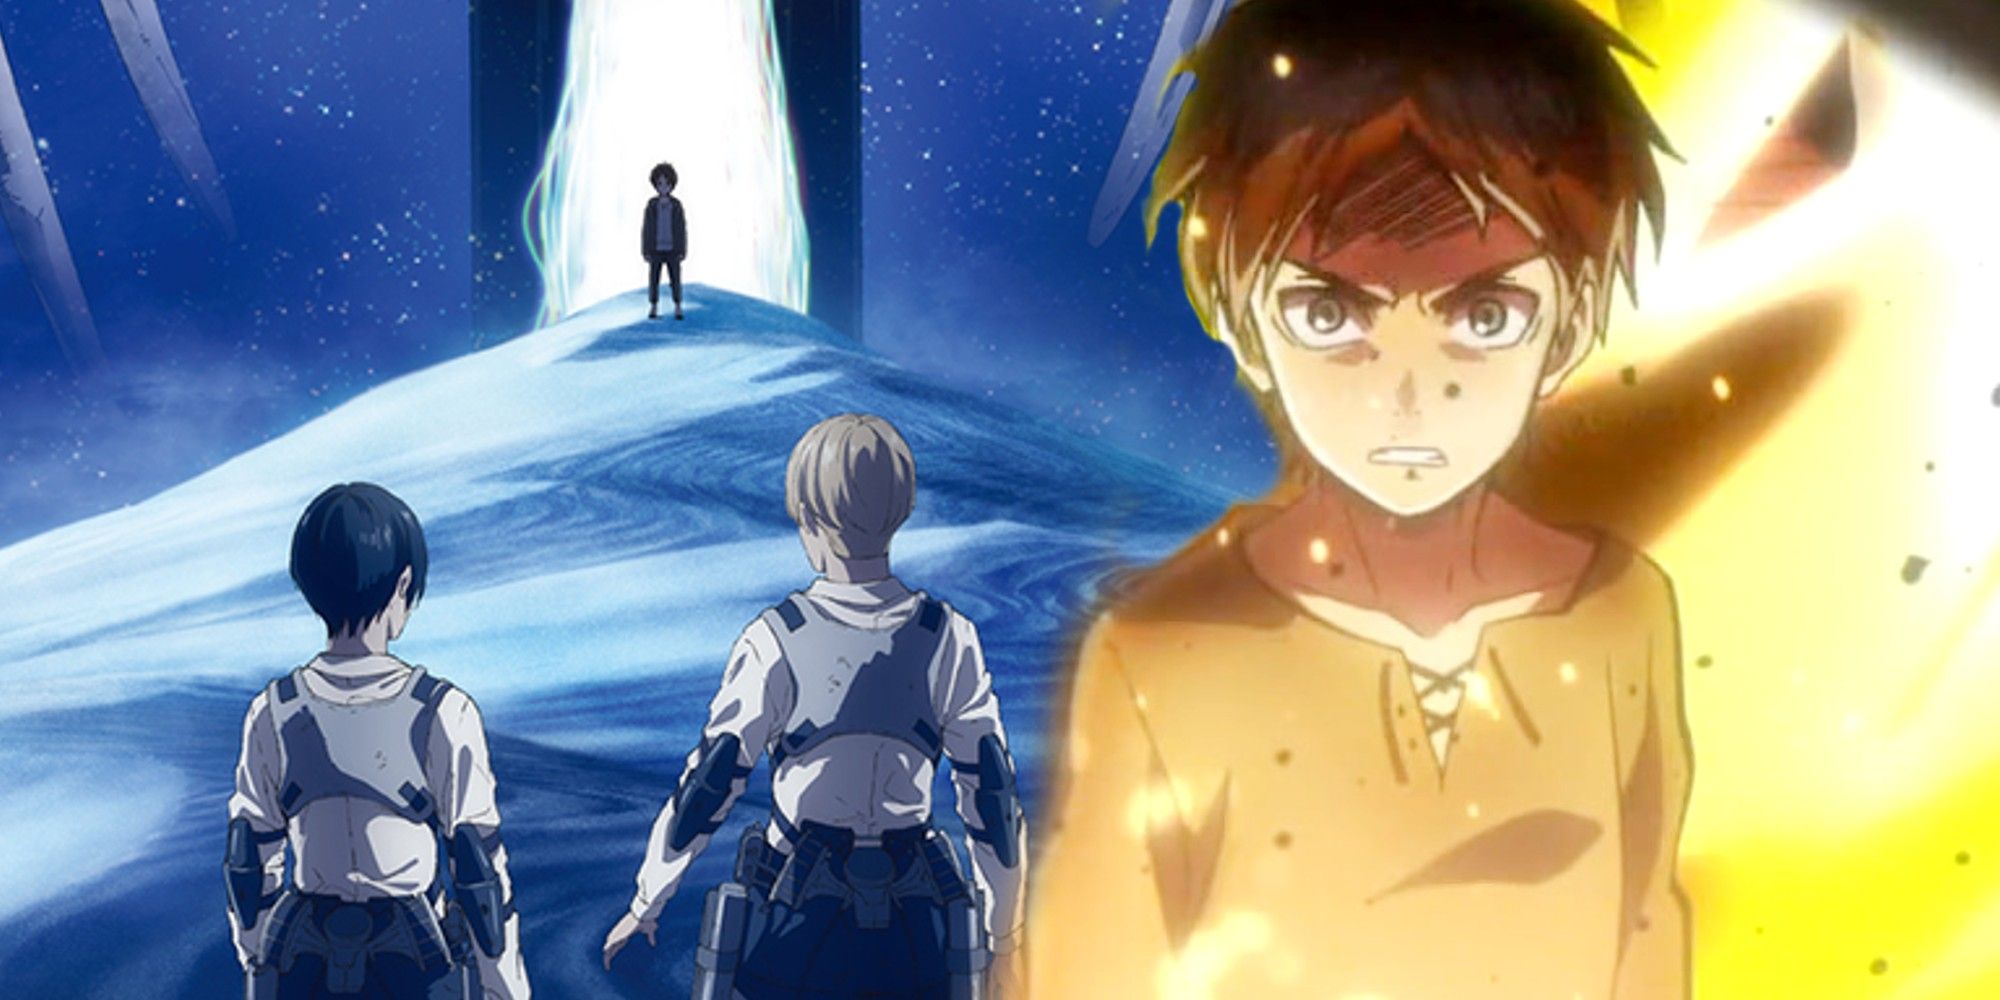 Attack On Titan Season 4 Art Teases A Mikasa Armin Past Eren Face Off